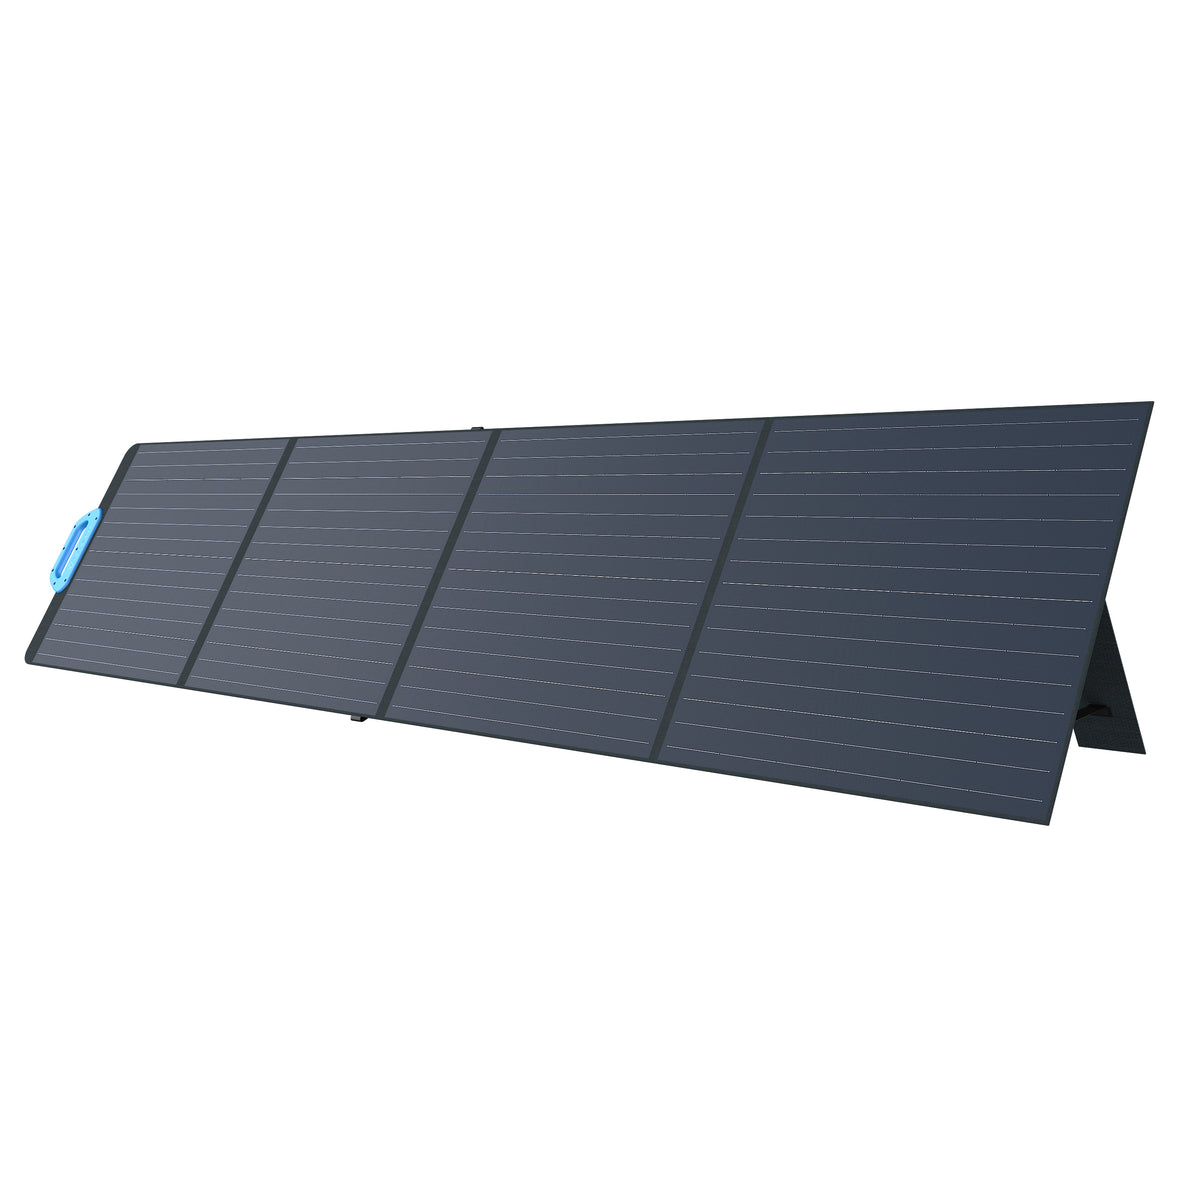 plenti SOLAR Solarpanel 200W tragbar faltbar Fotovoltaik Solarkraftwerk